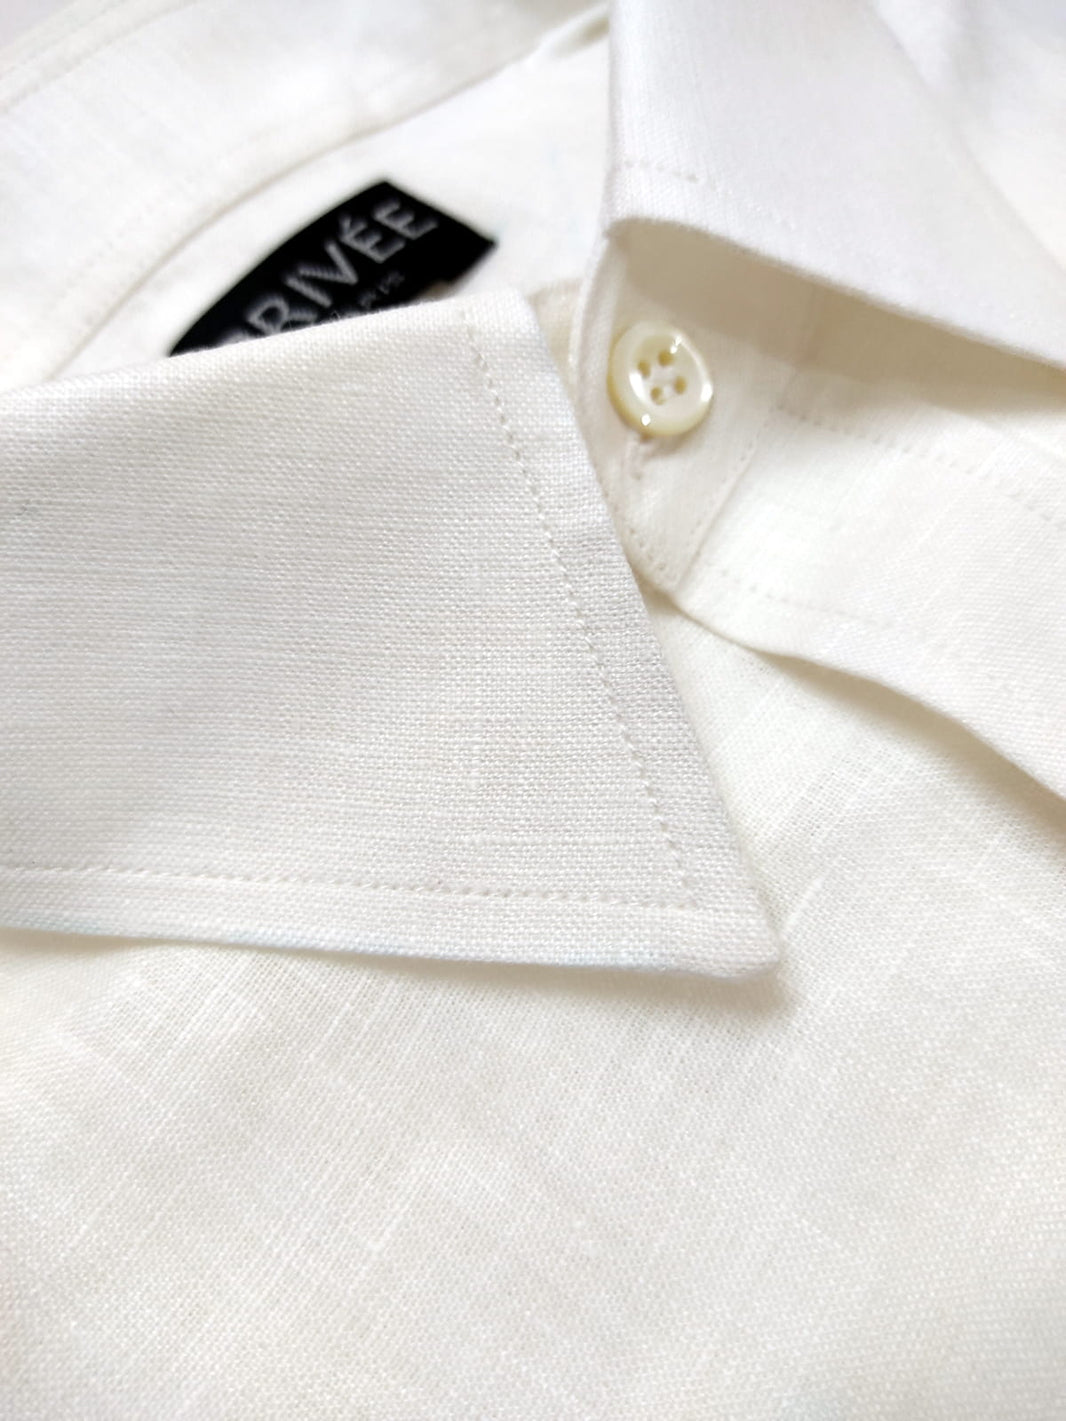 Finest Linen Shirts for Men in India | Privee Paris